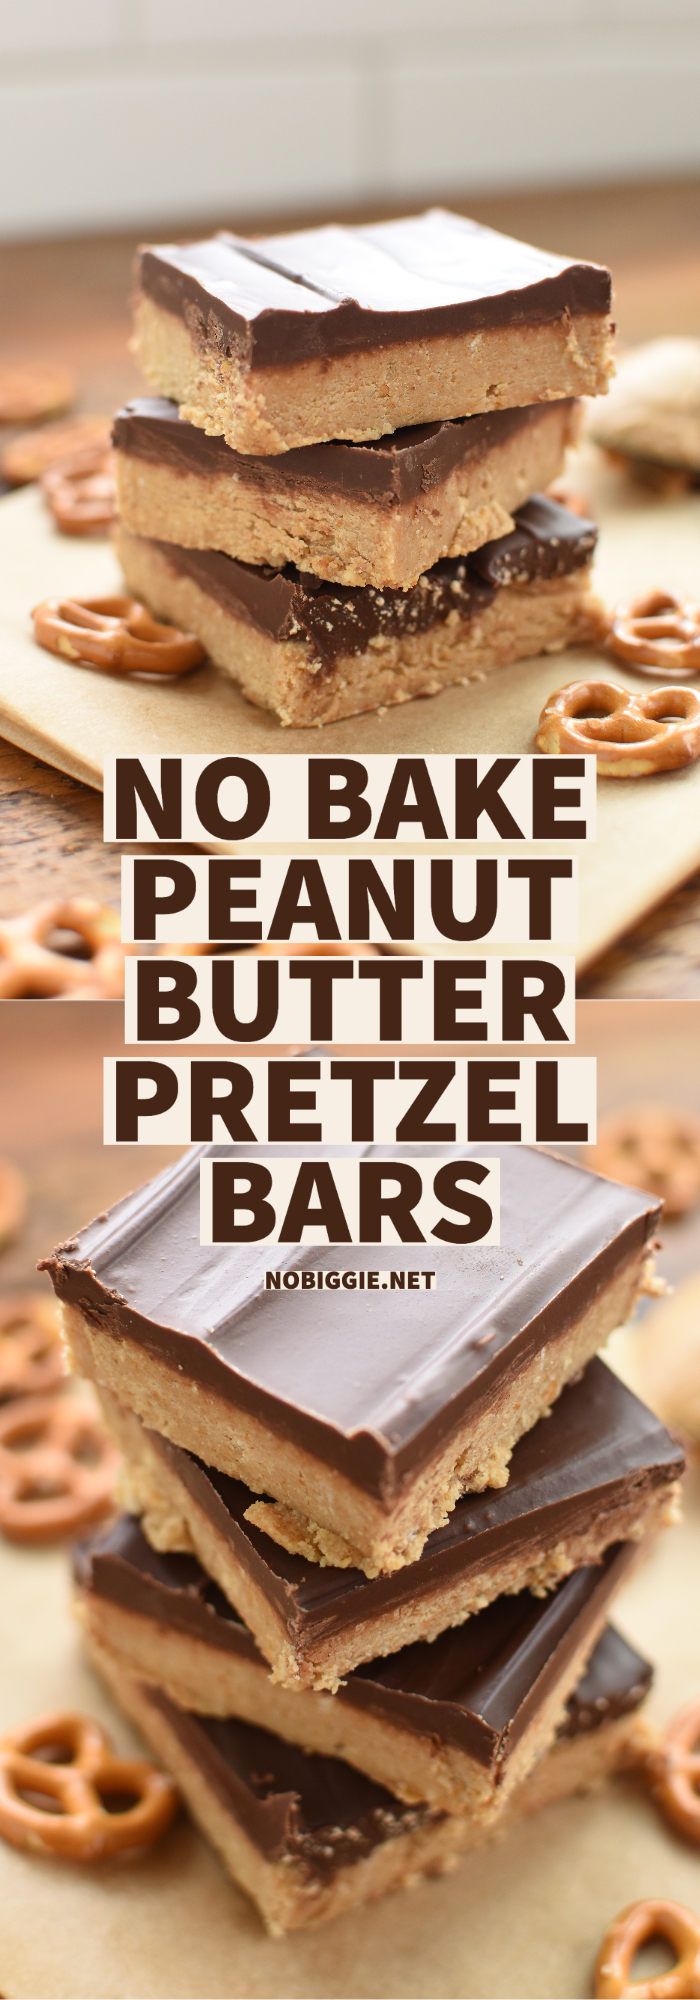 No Bake Chocolate Peanut Butter Pretzel Bars | NoBiggie.net